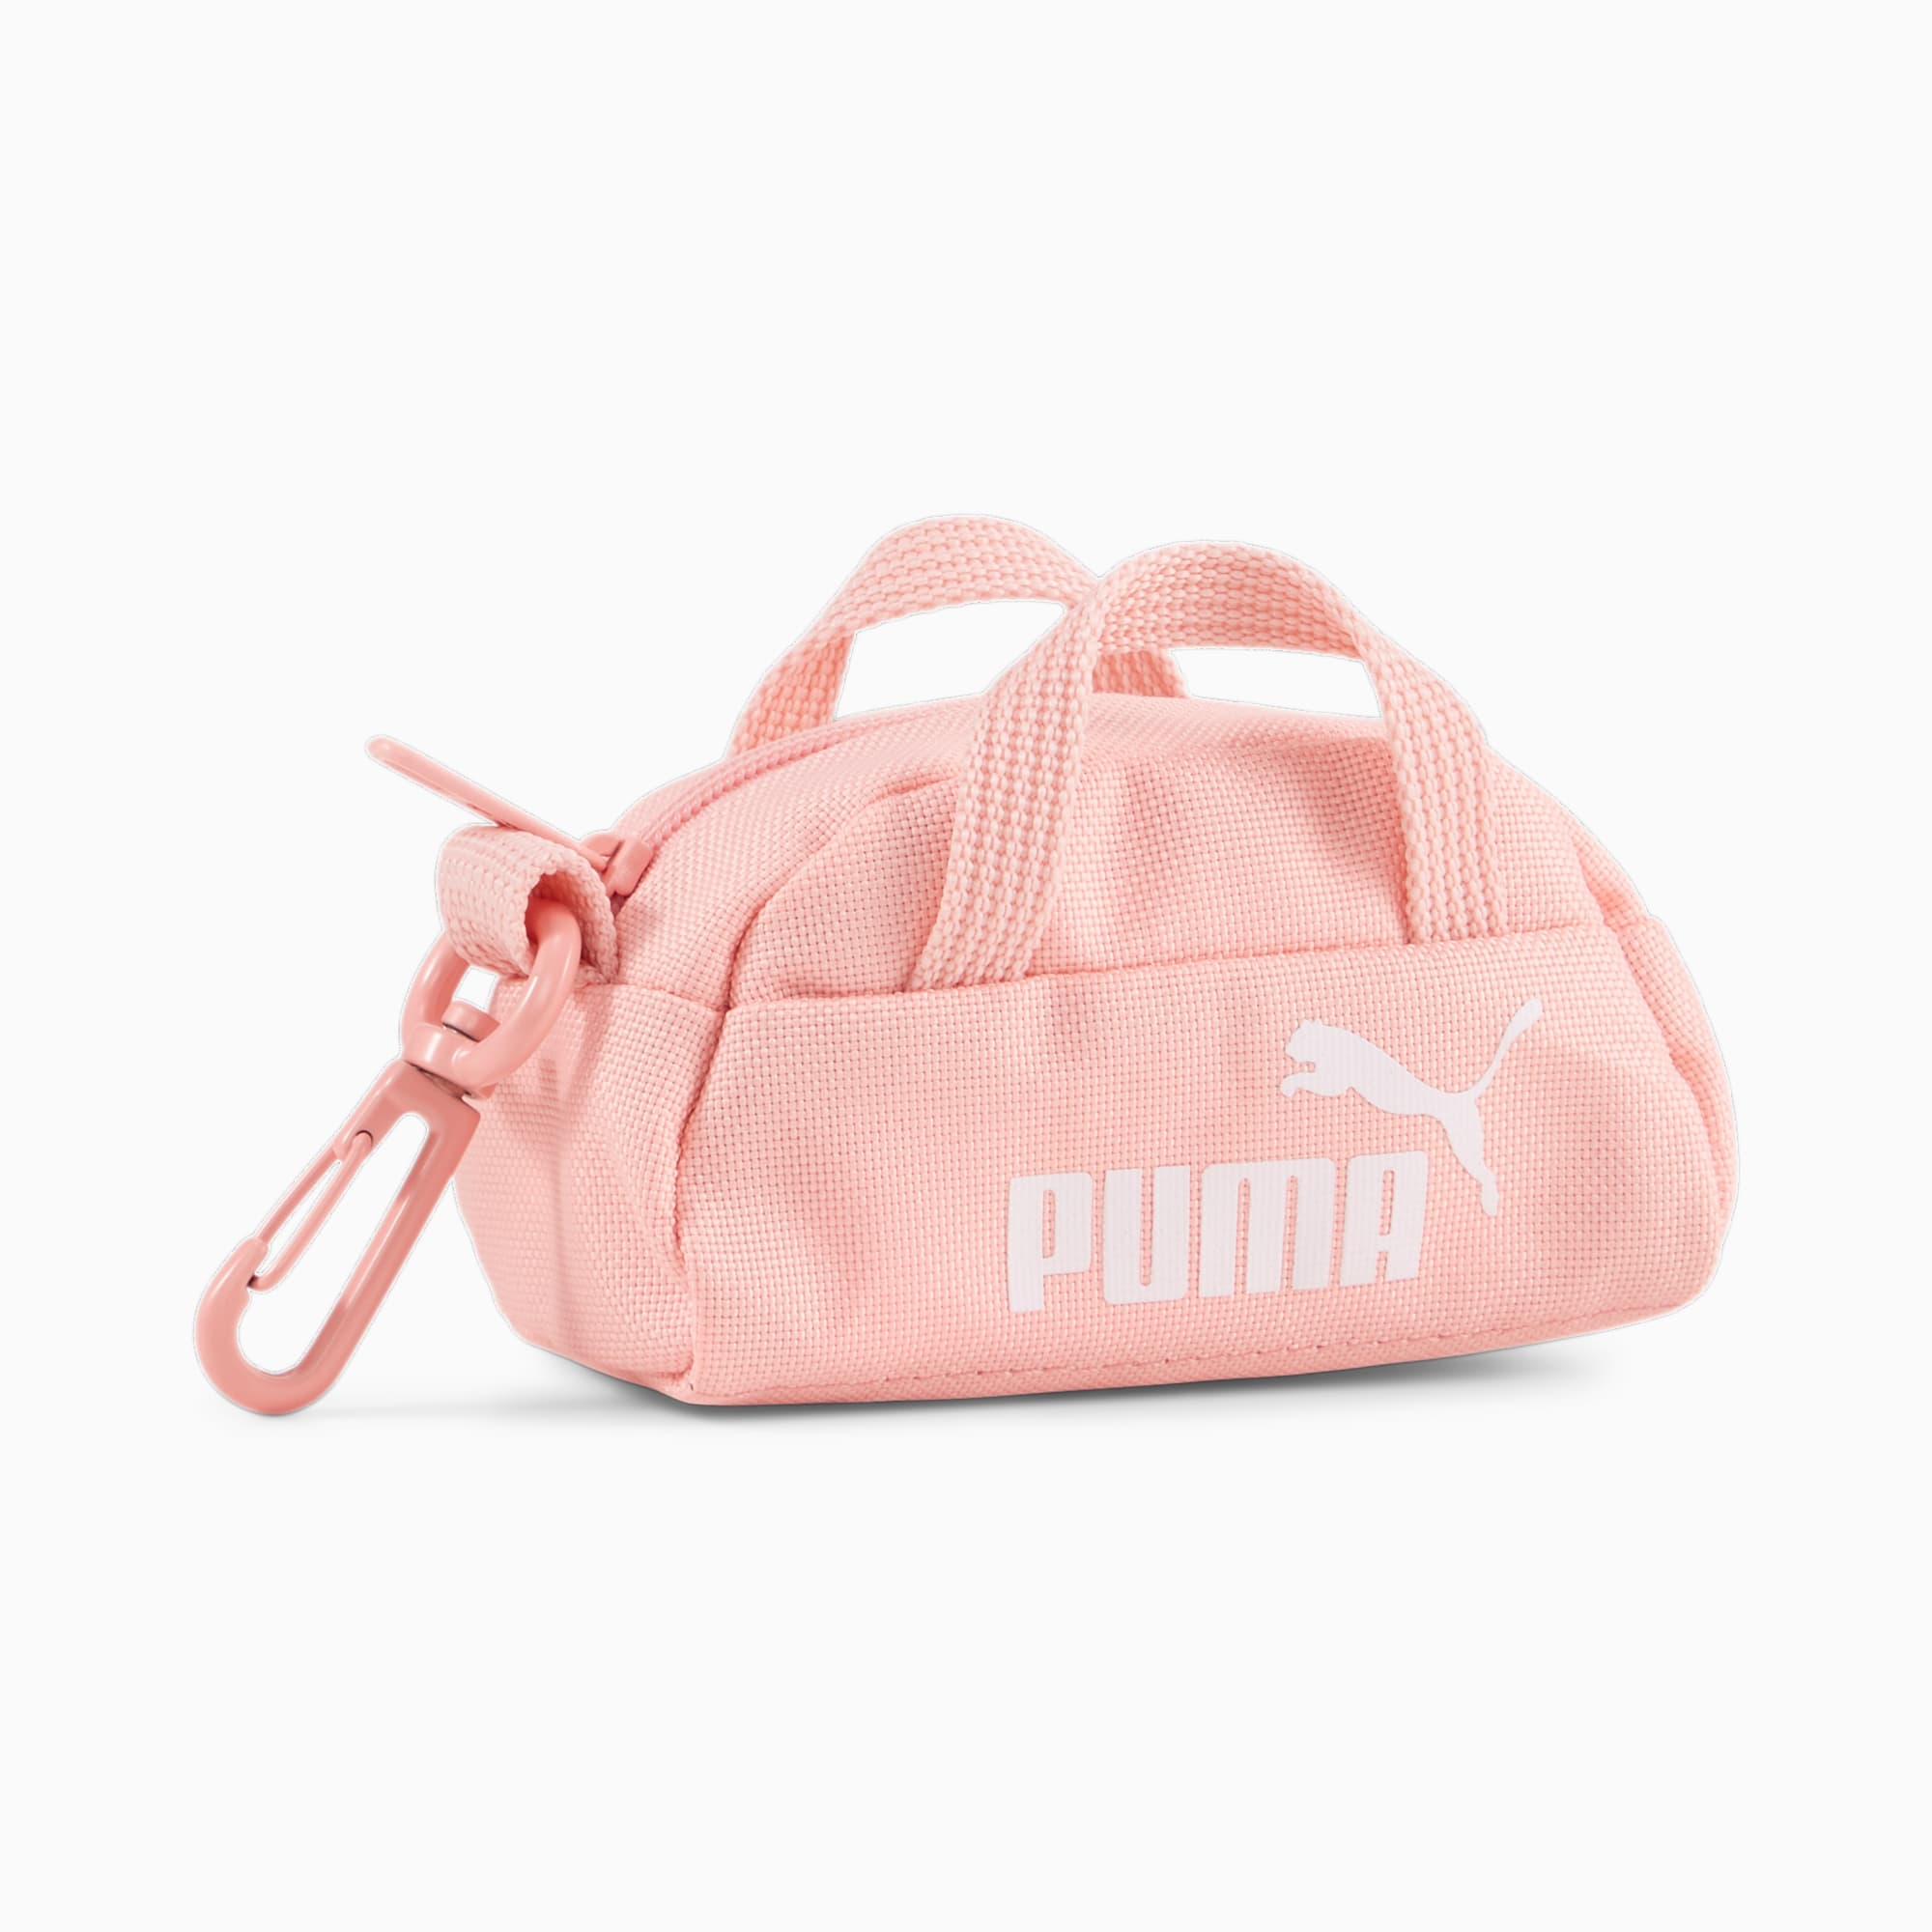 PUMA Phase Bag | Puma PUMA Shop All Sports Tiny | PUMA